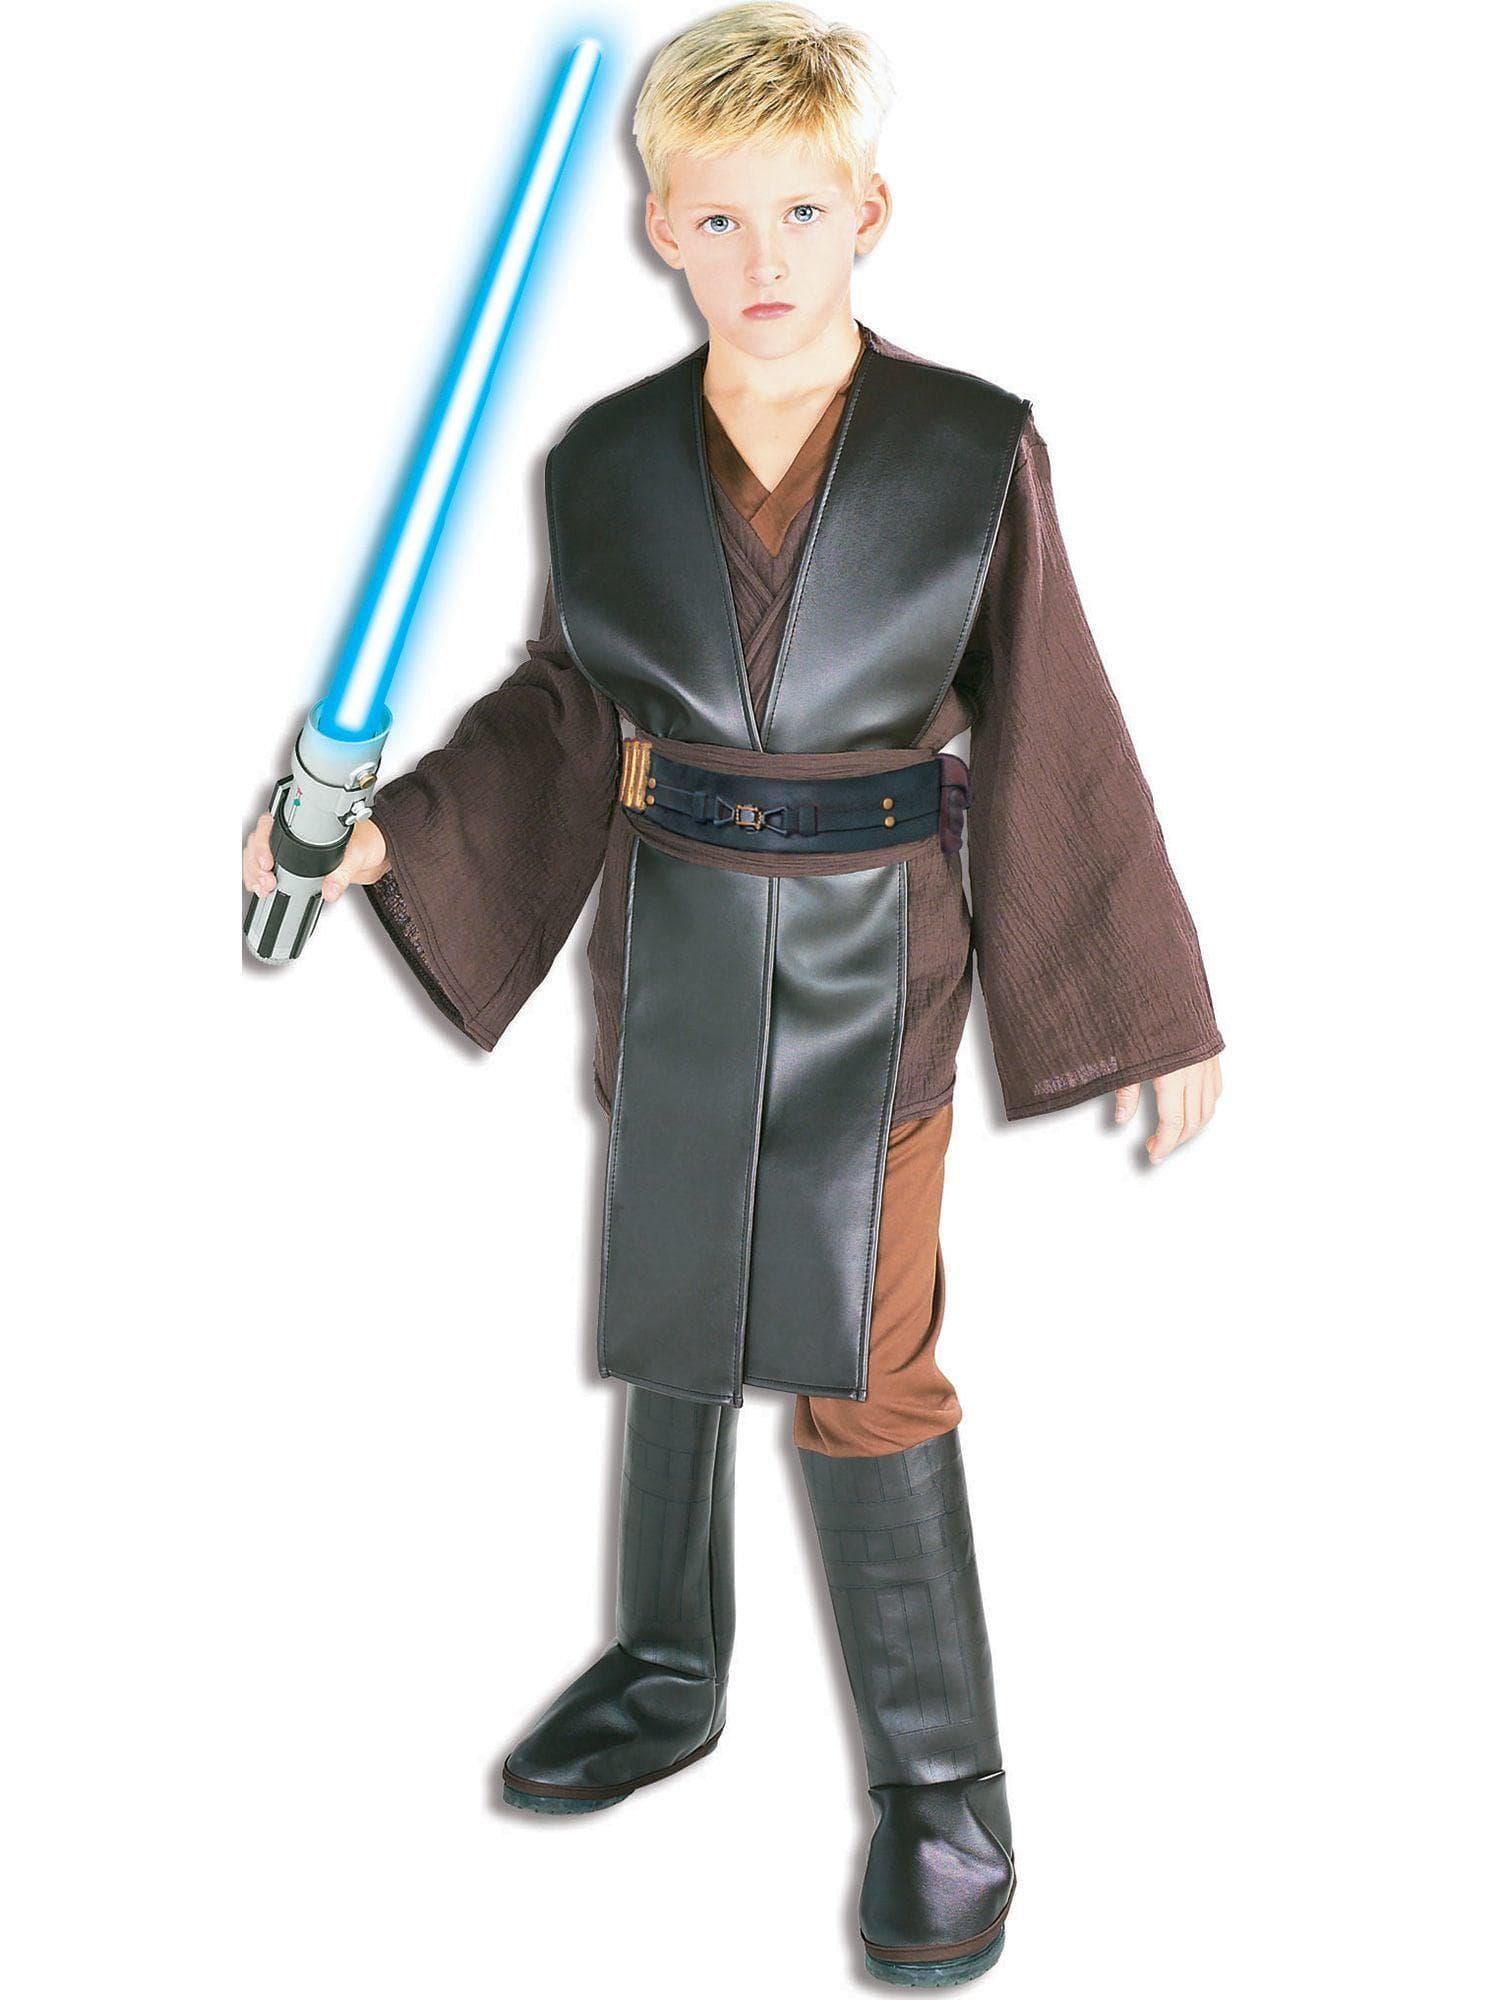 Kids Classic Star Wars Anakin Skywalker Deluxe Costume - costumes.com